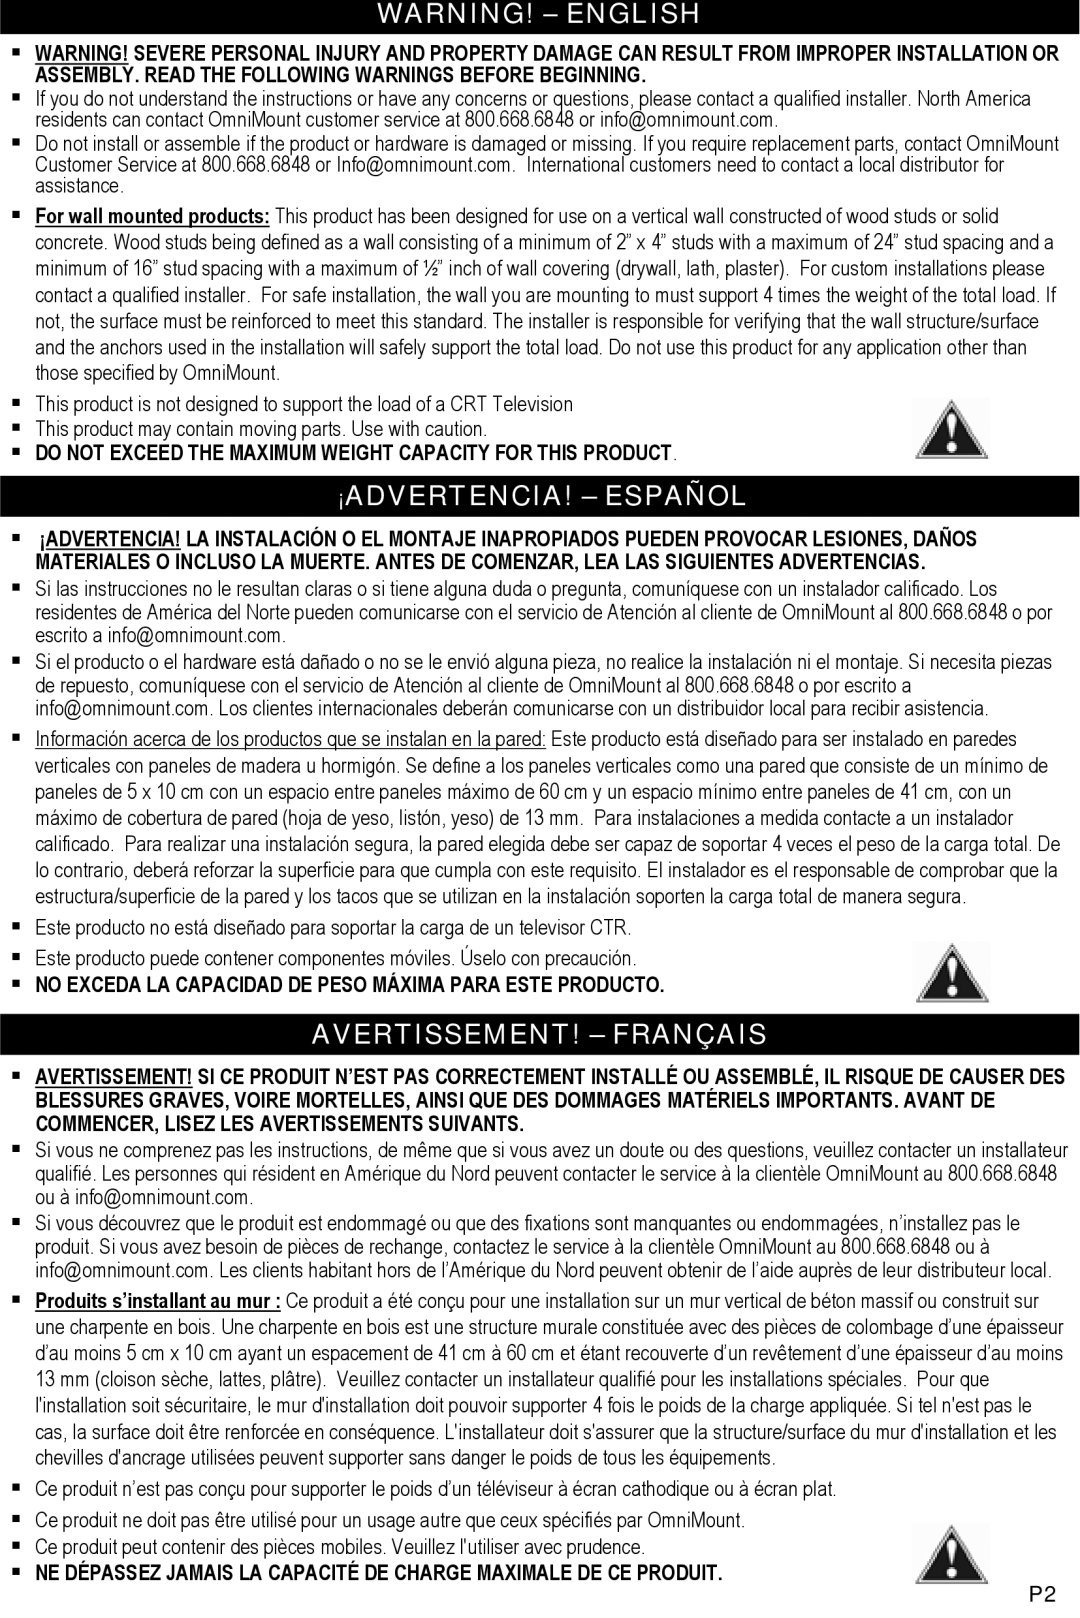 Omnimount ULPC-X, OM1004107 manual Warning! - English, ¡Advertencia! - Español, Avertissement! - Français 